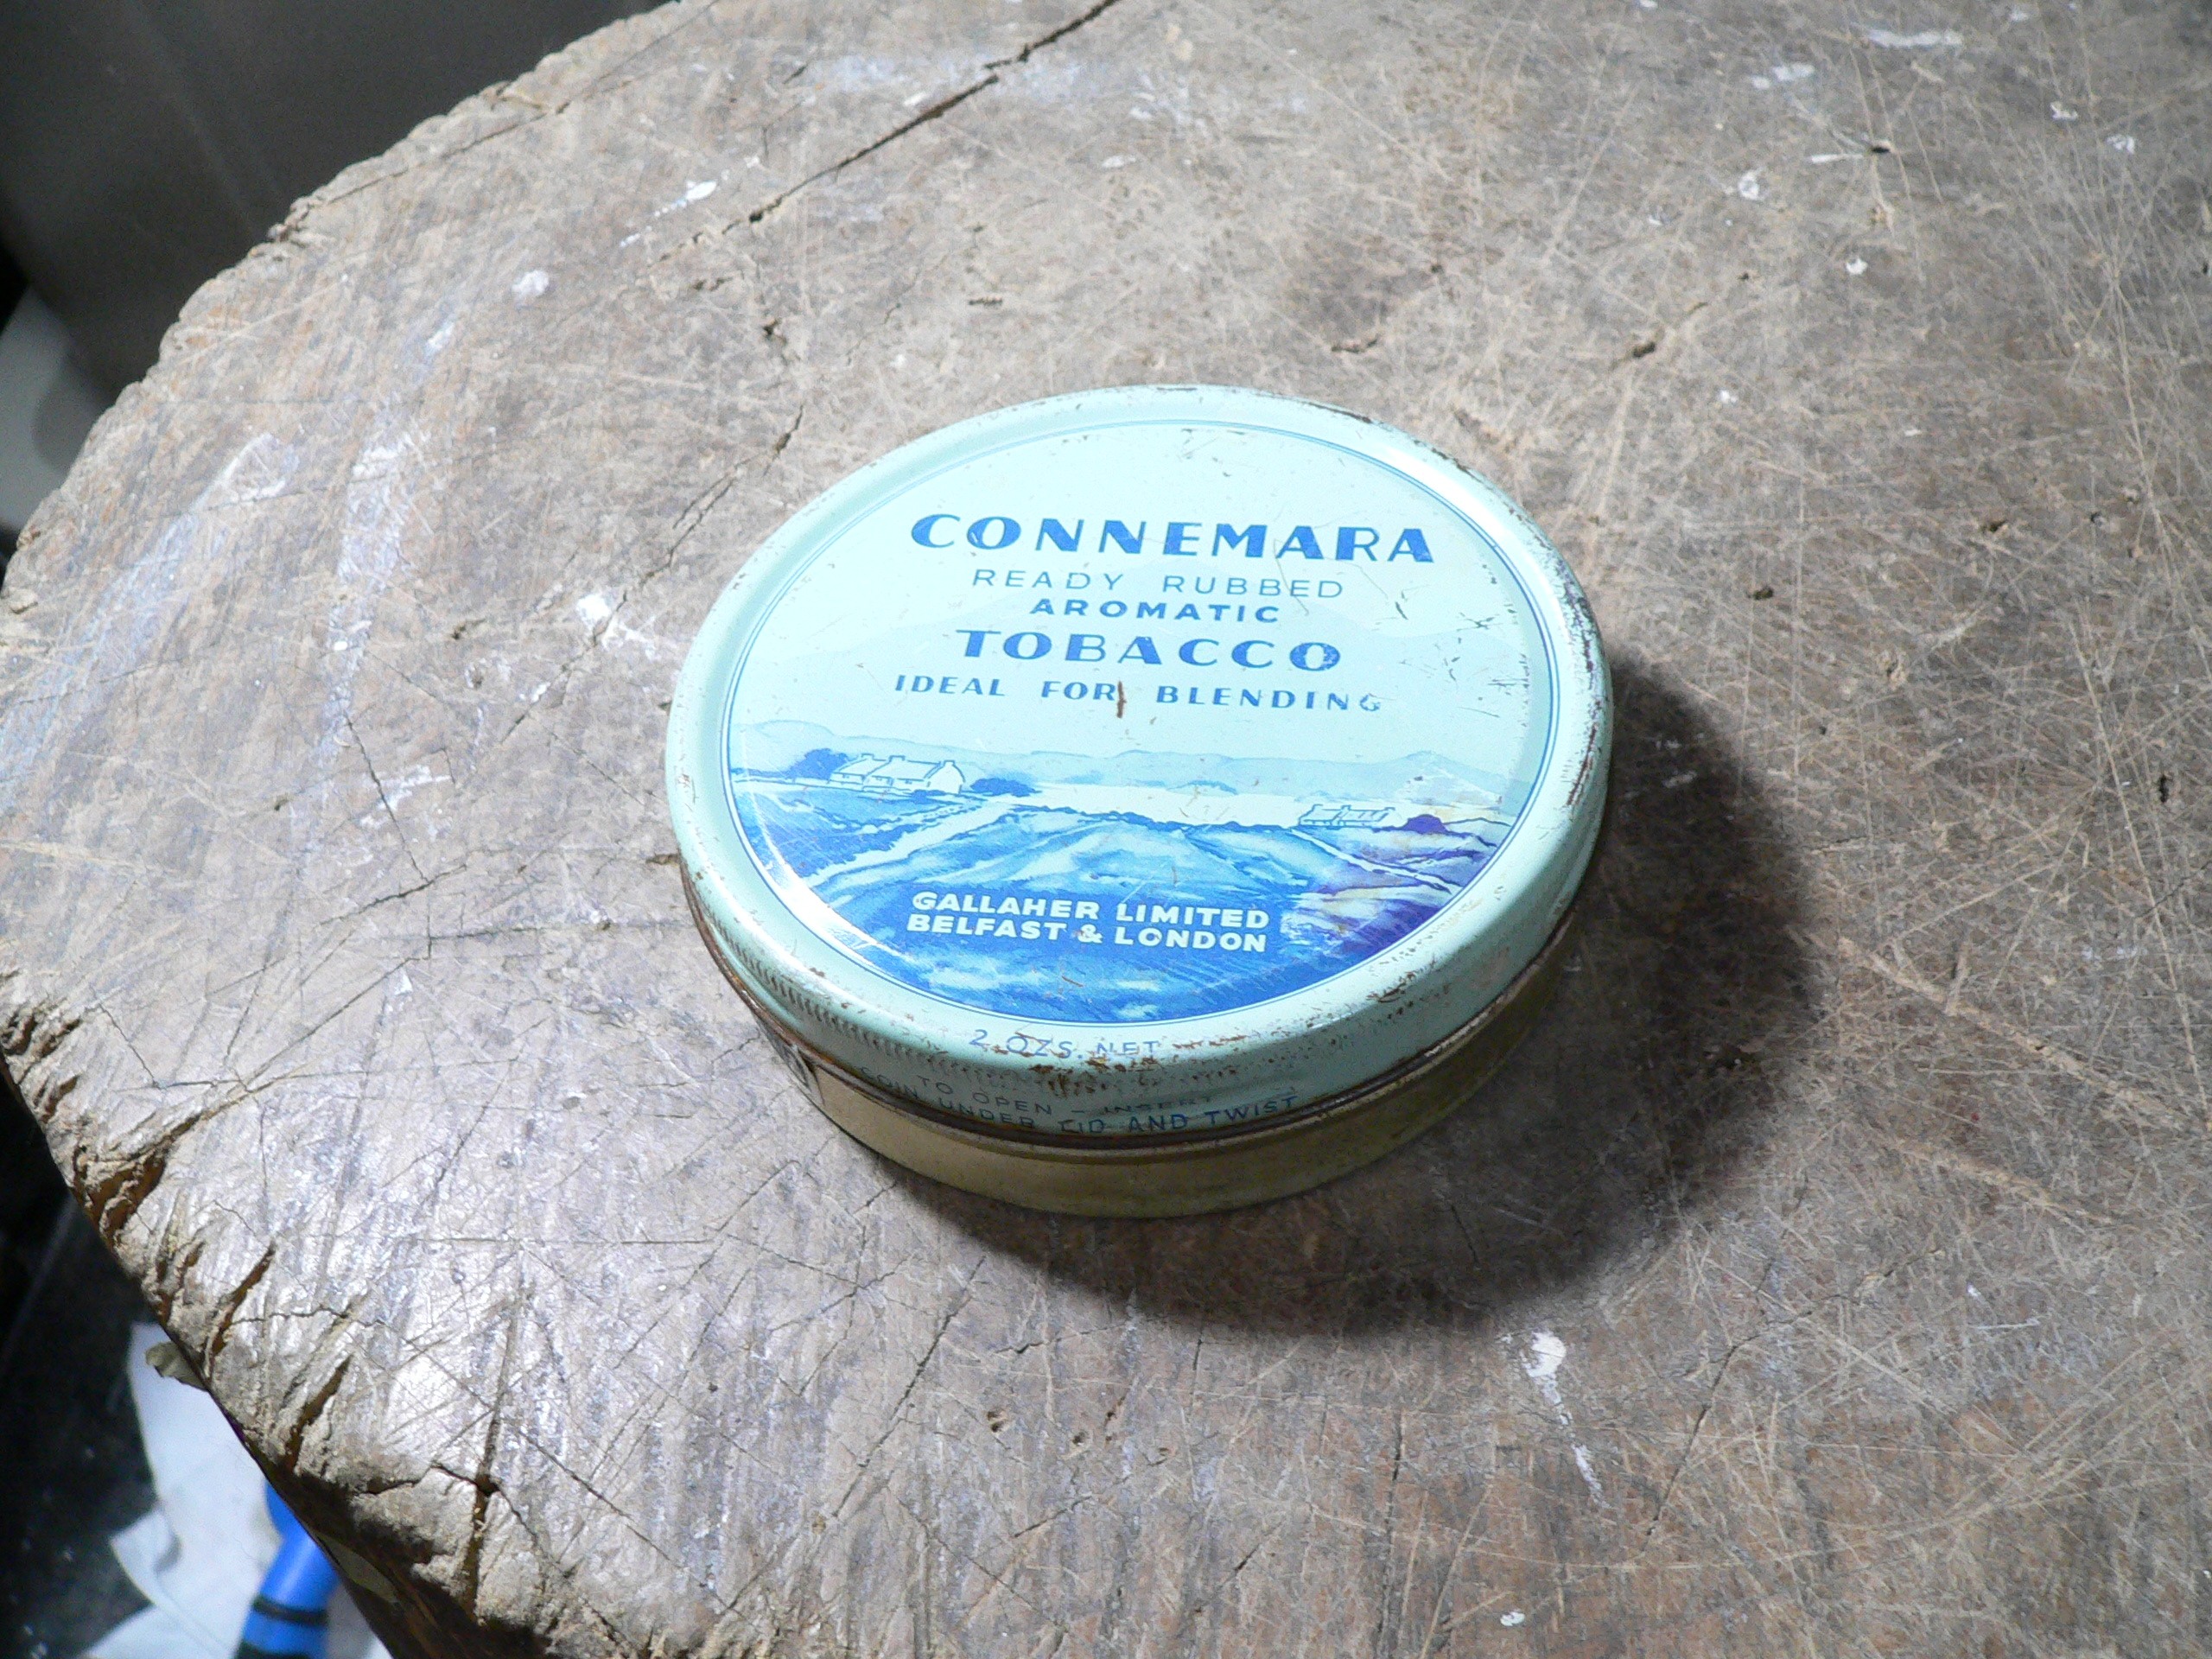 Canne antique Connemara # 9427.12